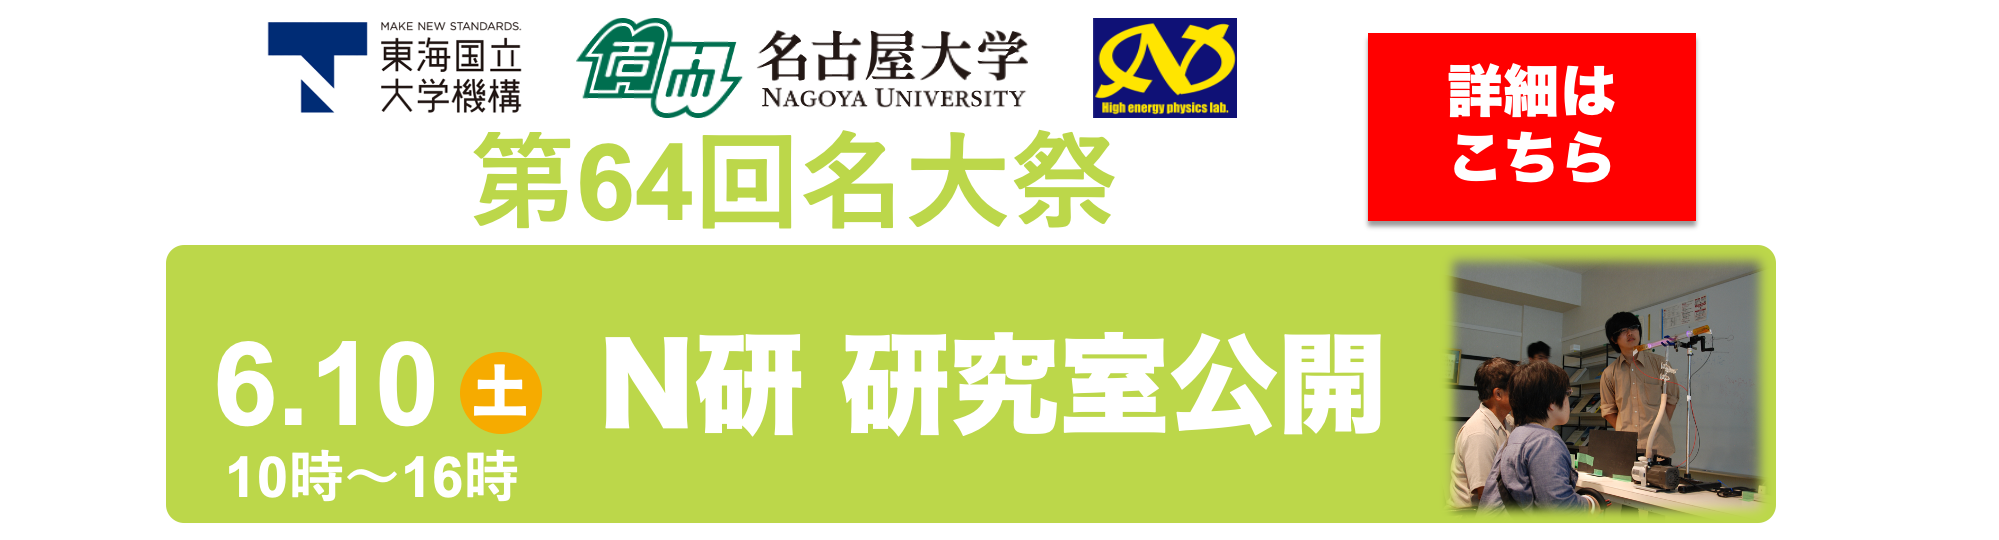 NUHEPL Nagoya University High Energy Physics Laboratory